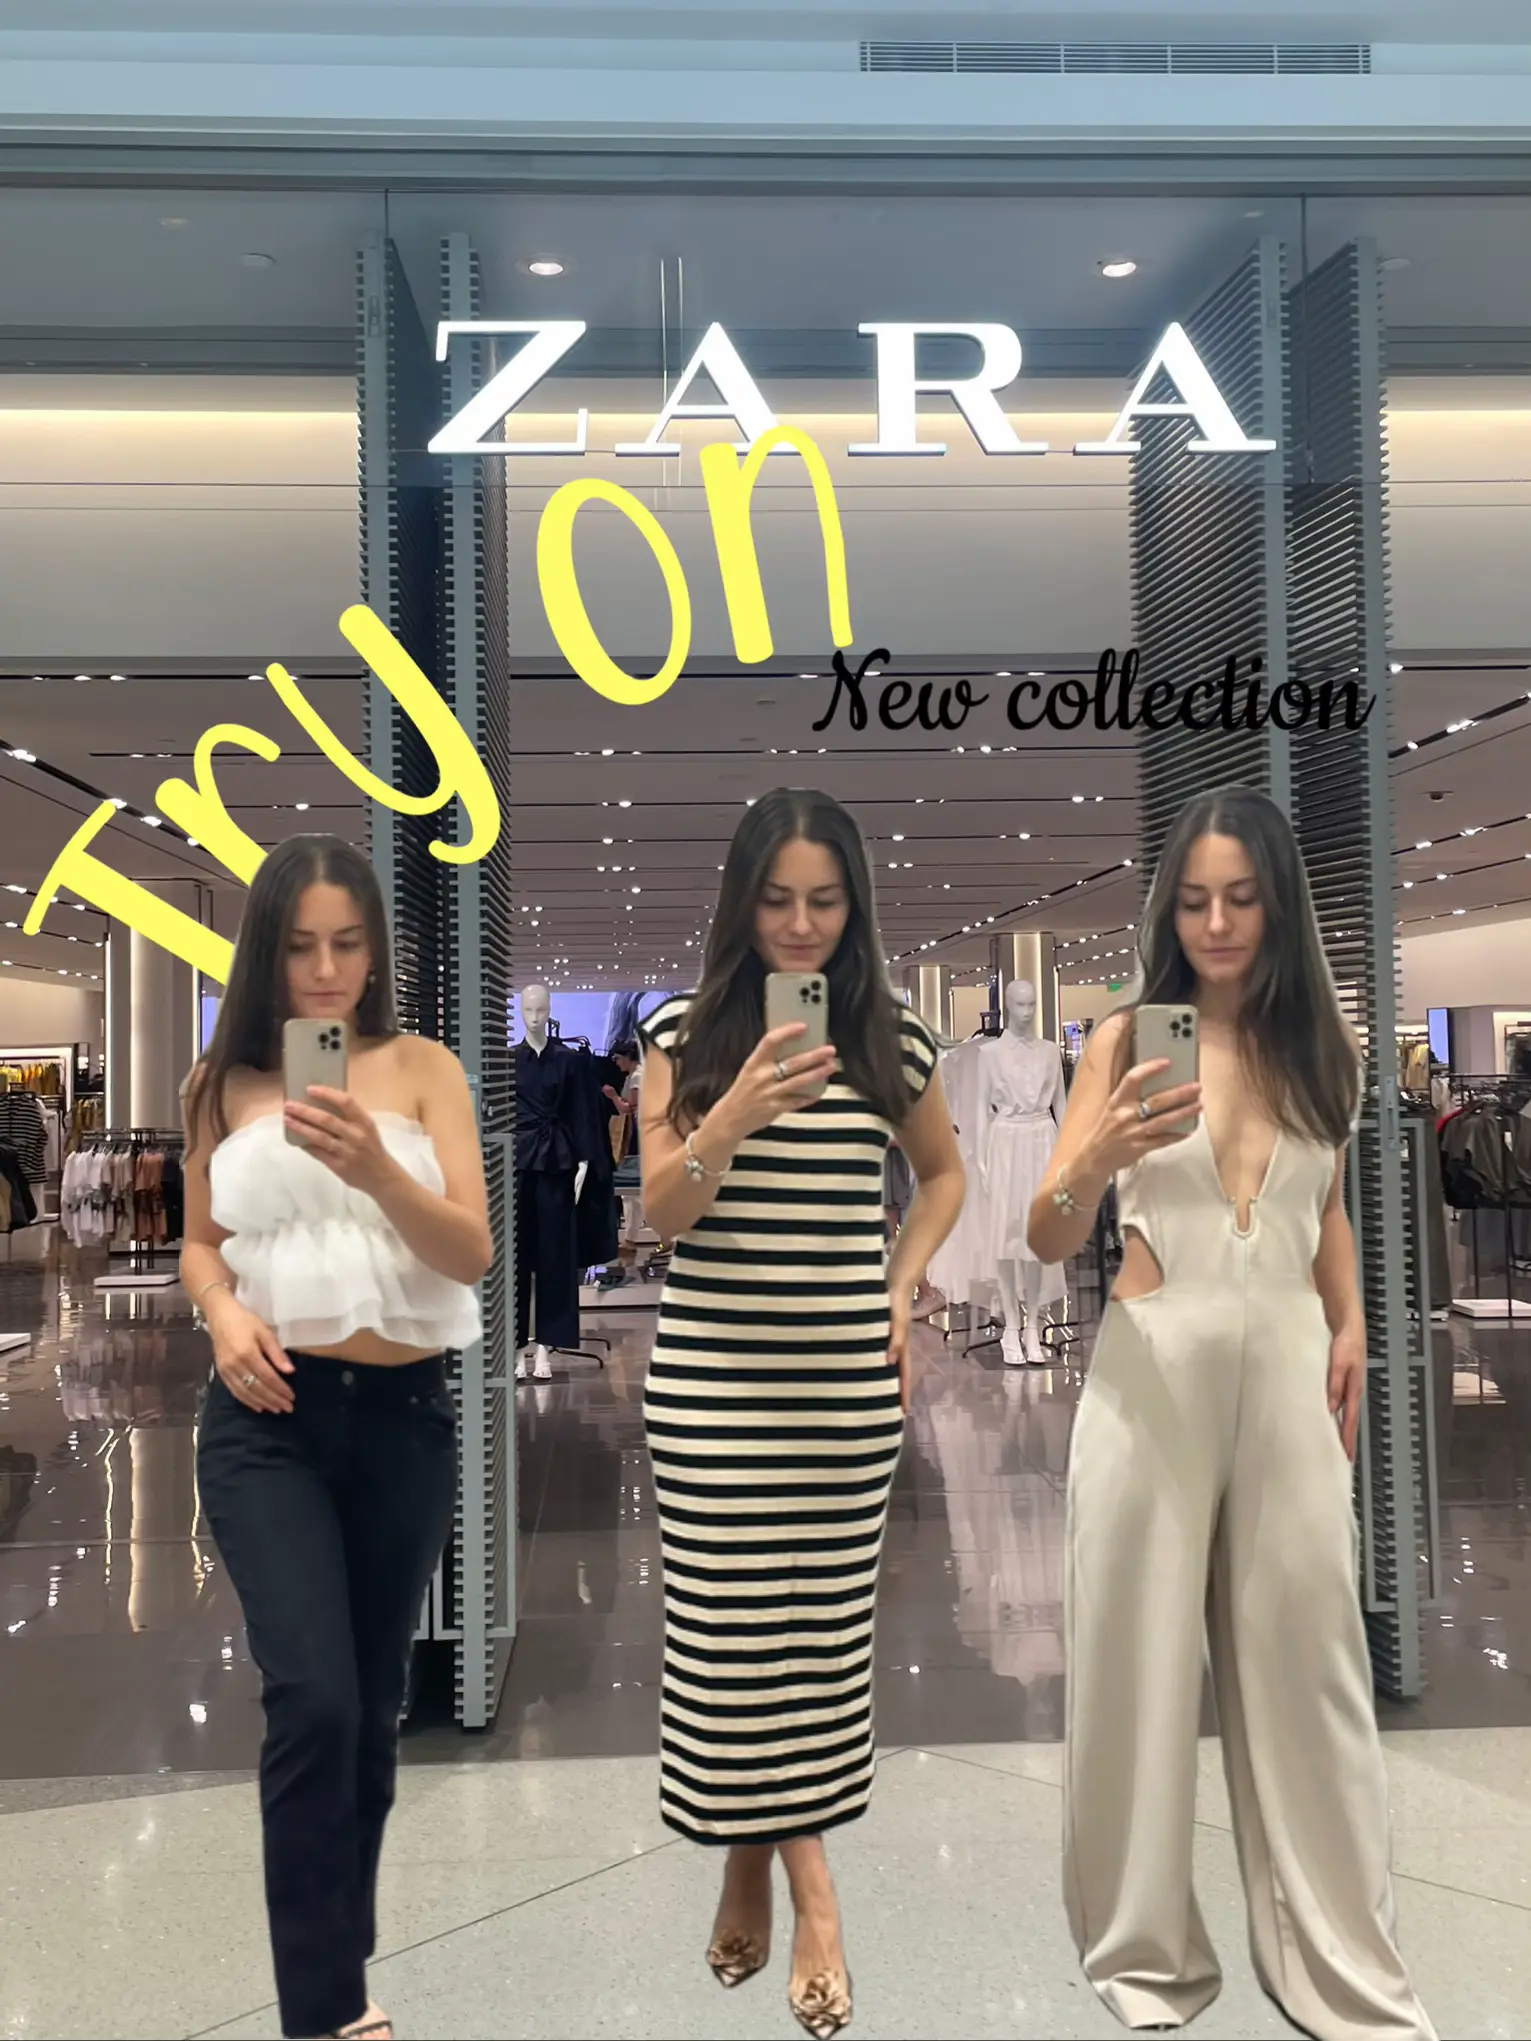 Zara New Collection